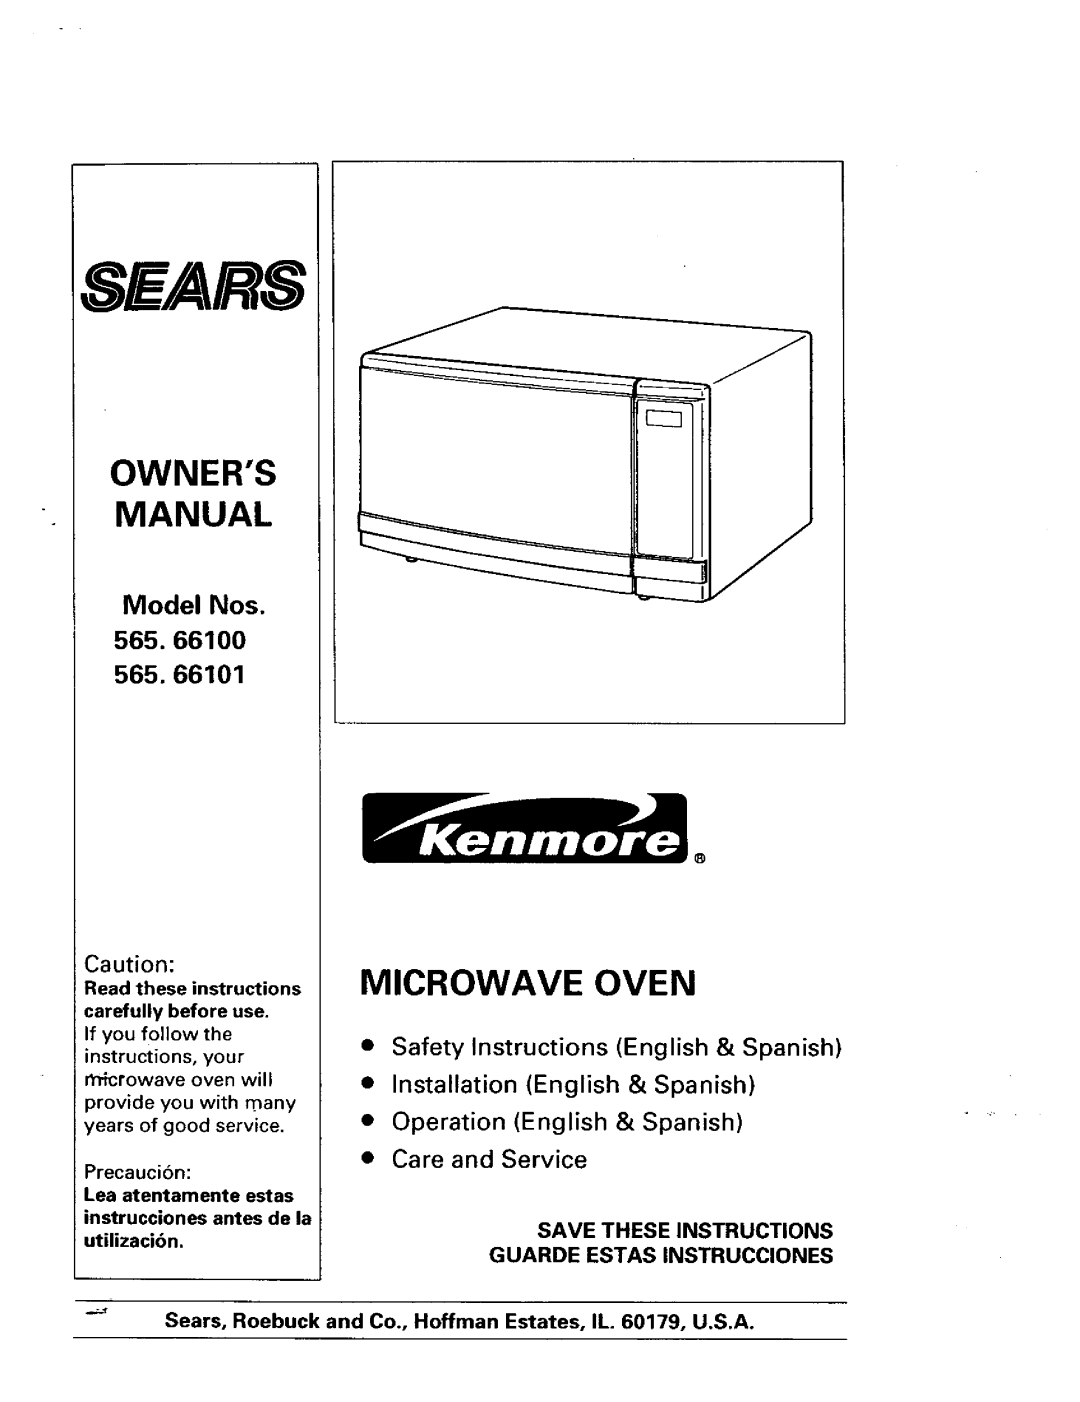 Sears 565.66101 owner manual Model Nos 565.66100, Safety Instructions English & Spanish, •Installation English & Spanish 